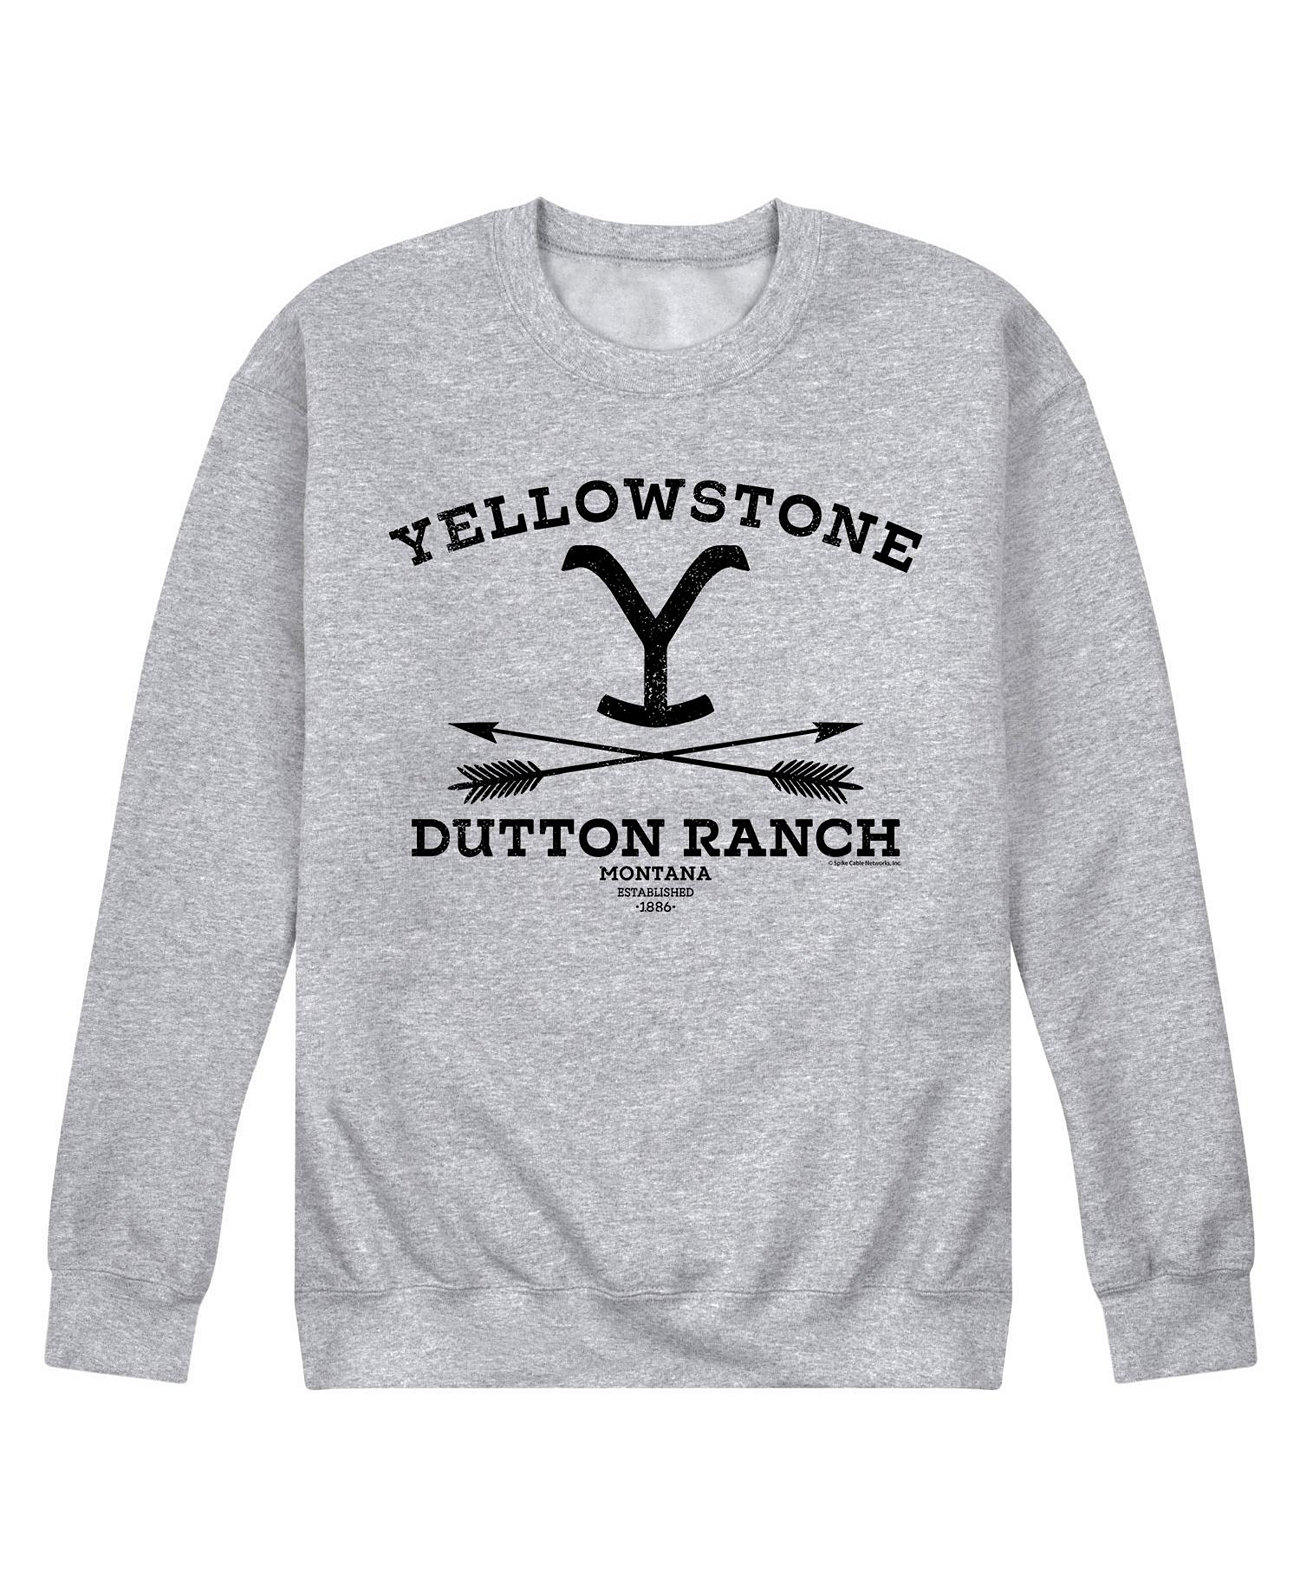 Мужская флисовая толстовка Yellowstone Dutton Ranch Arrows AIRWAVES